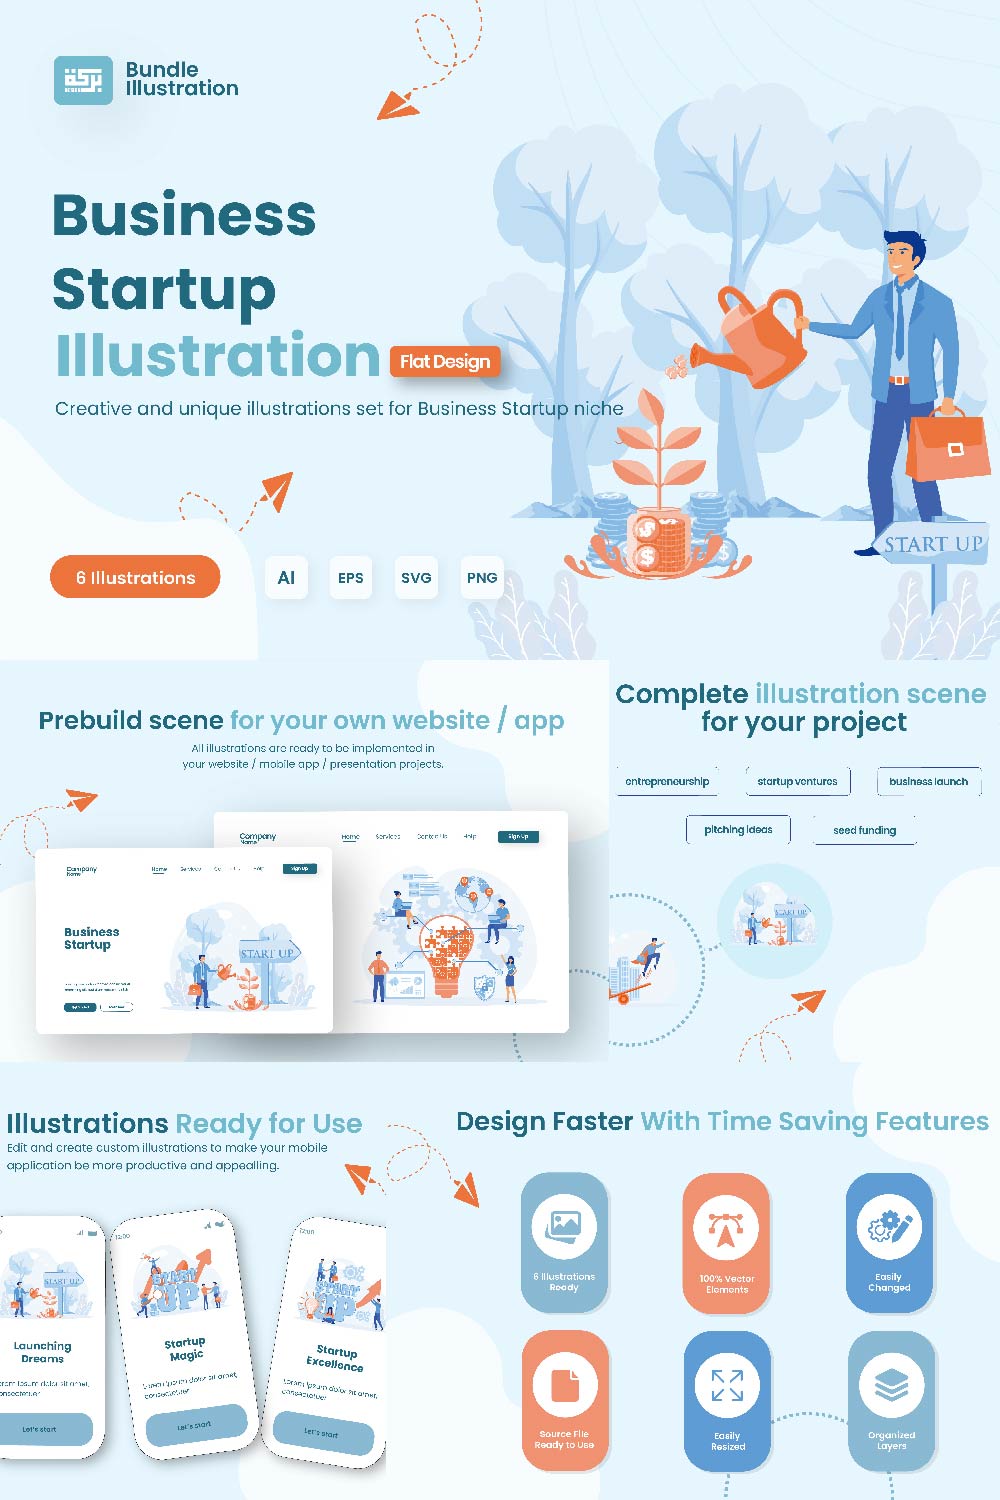 Illustration Design Business Startup pinterest preview image.